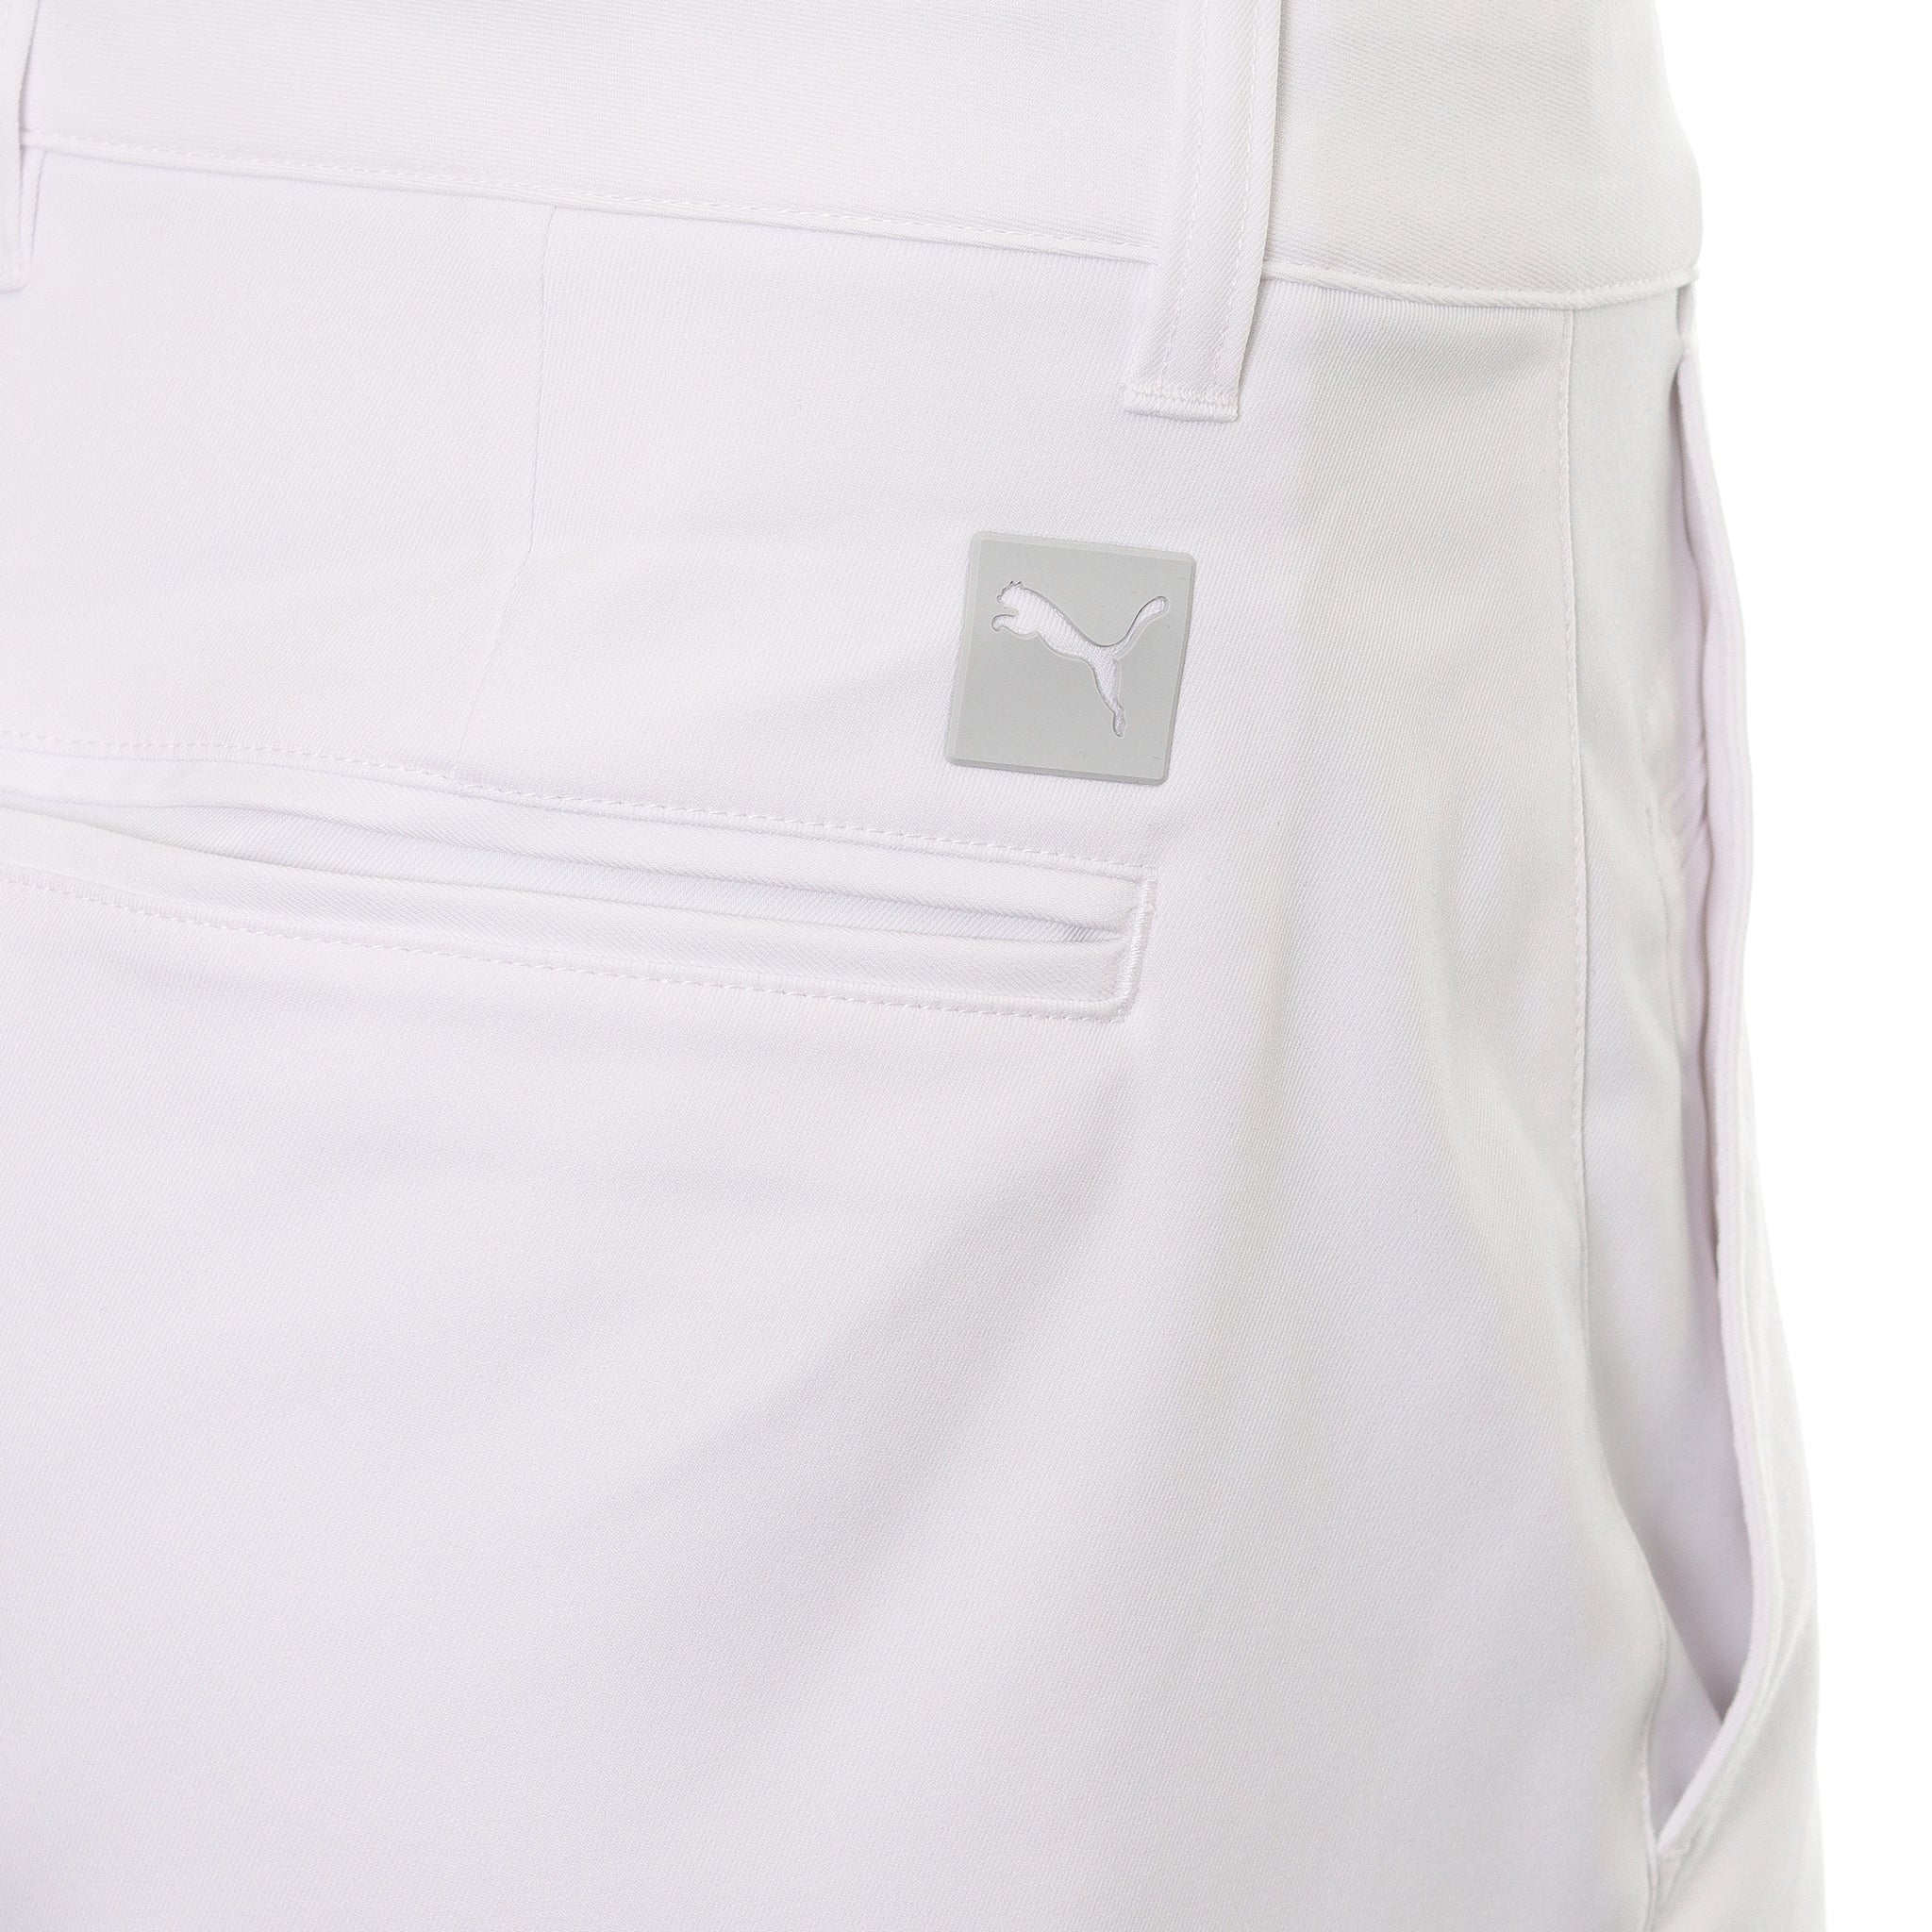 puma-golf-dealer-tailored-pant-535524-white-glow-01